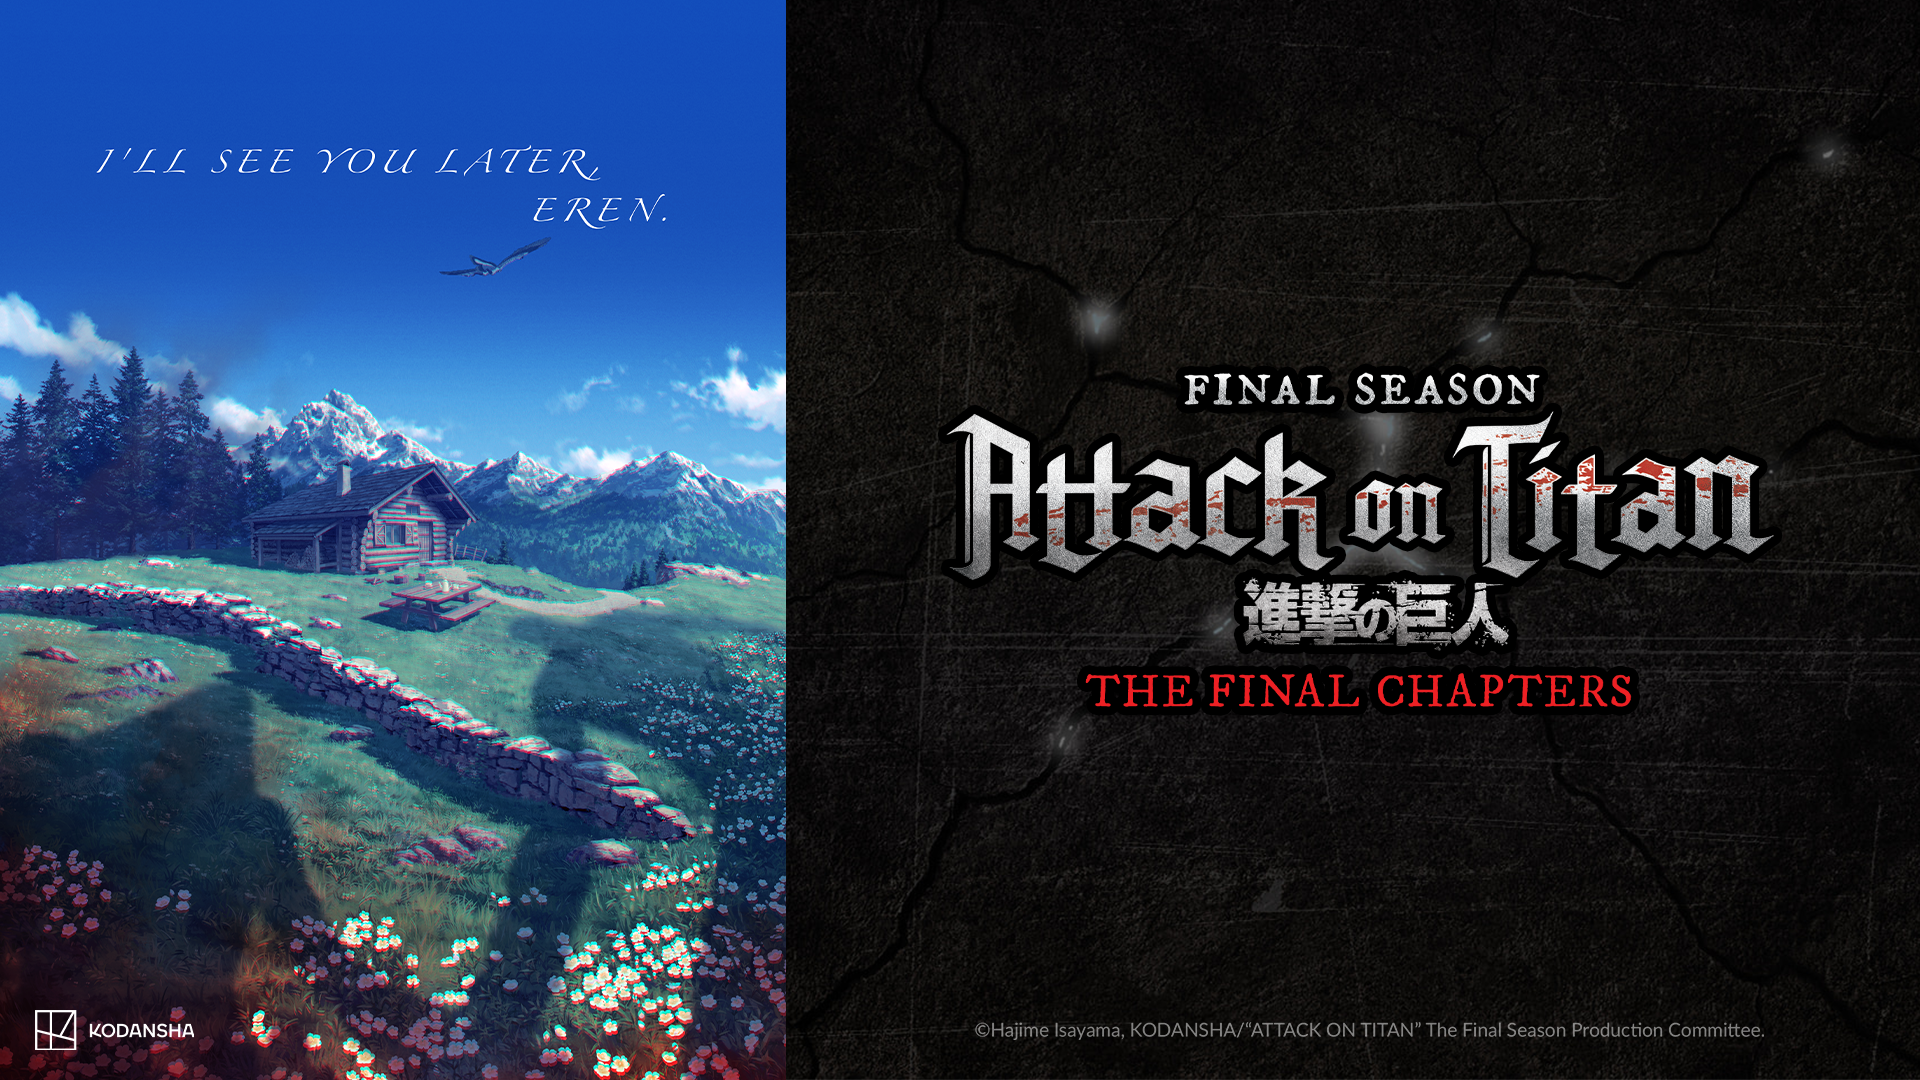 Attack on Titan' Final Season New Teaser Image